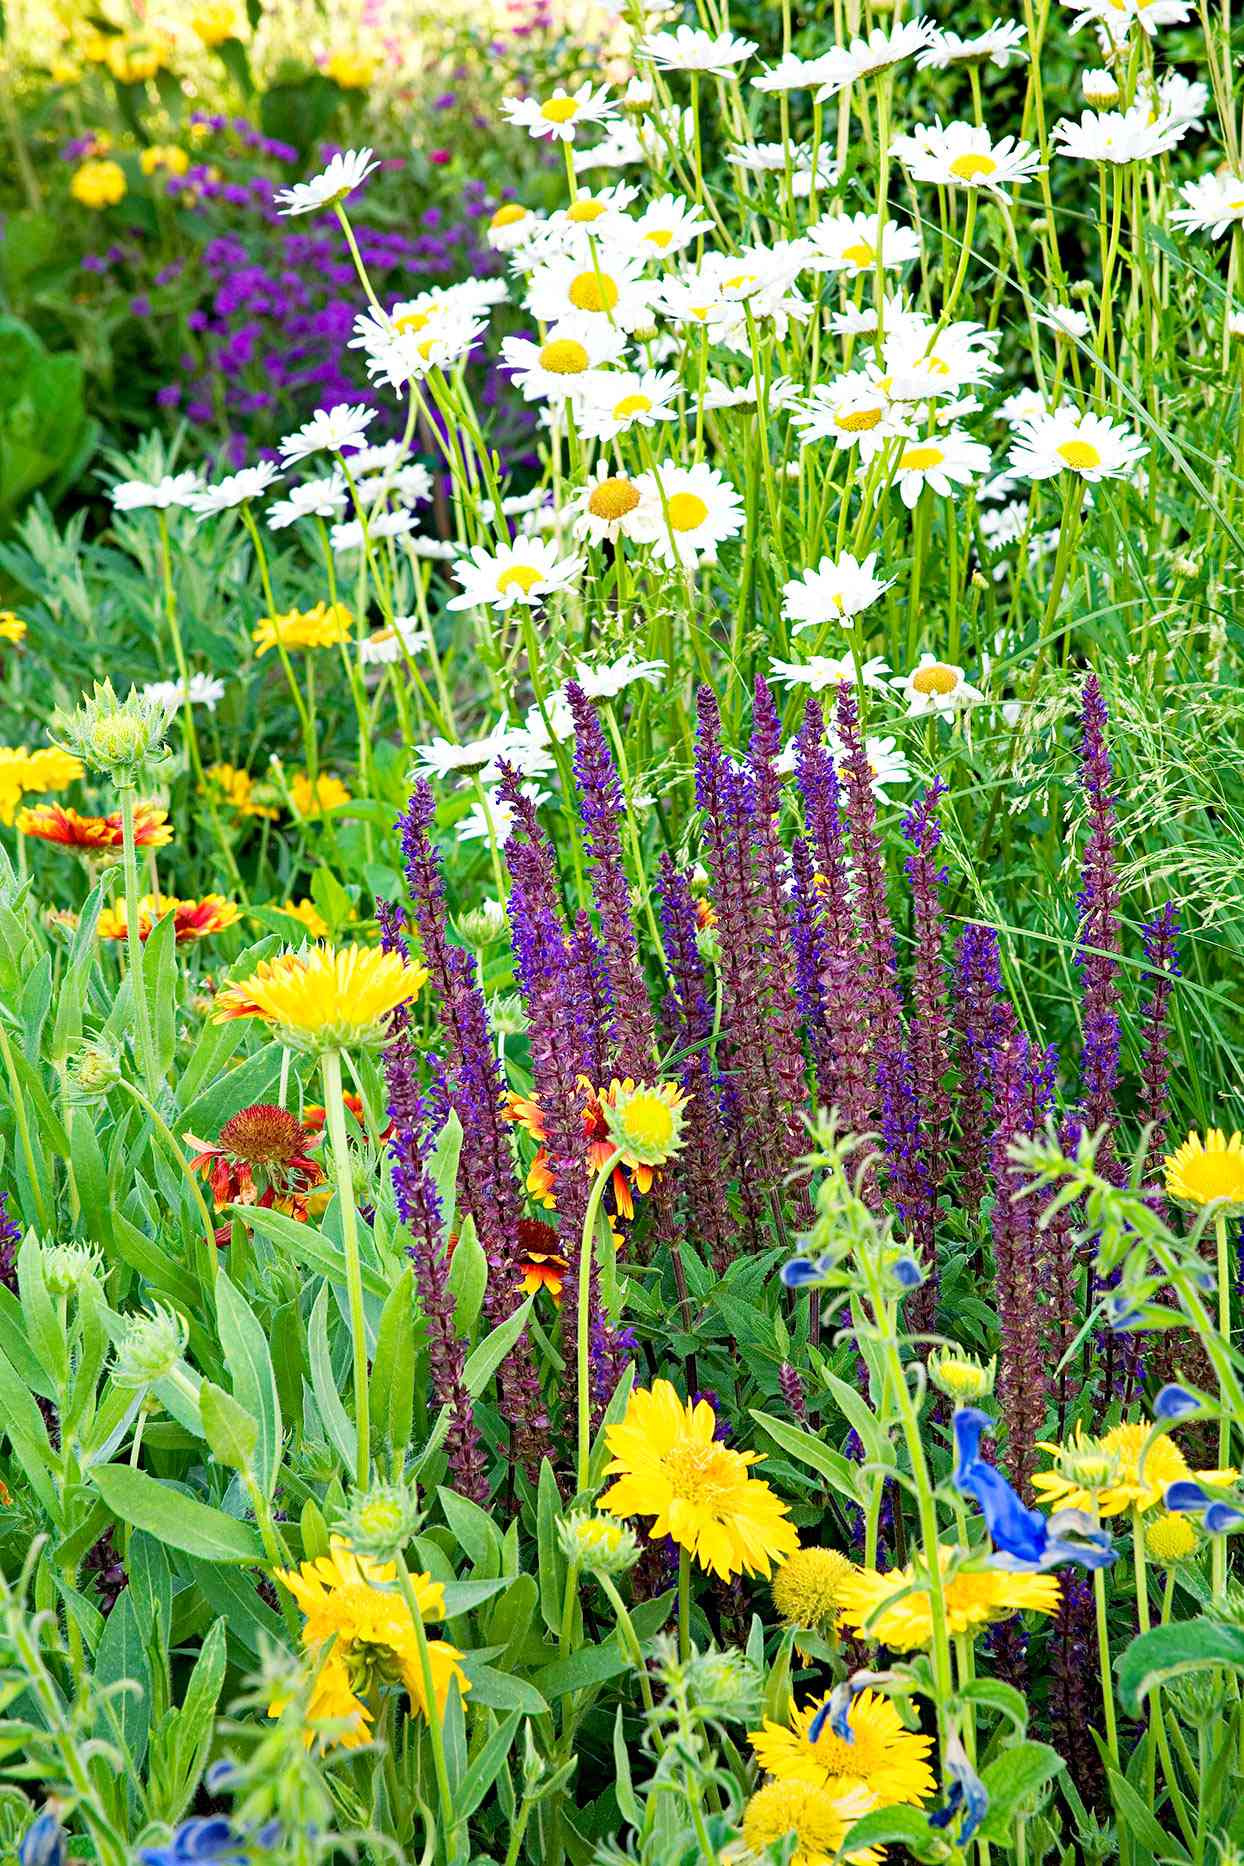 Details about   5 Canna Seeds Plants Flowers Garden Nature Beauty Fresh Colorful Perennials Grow 